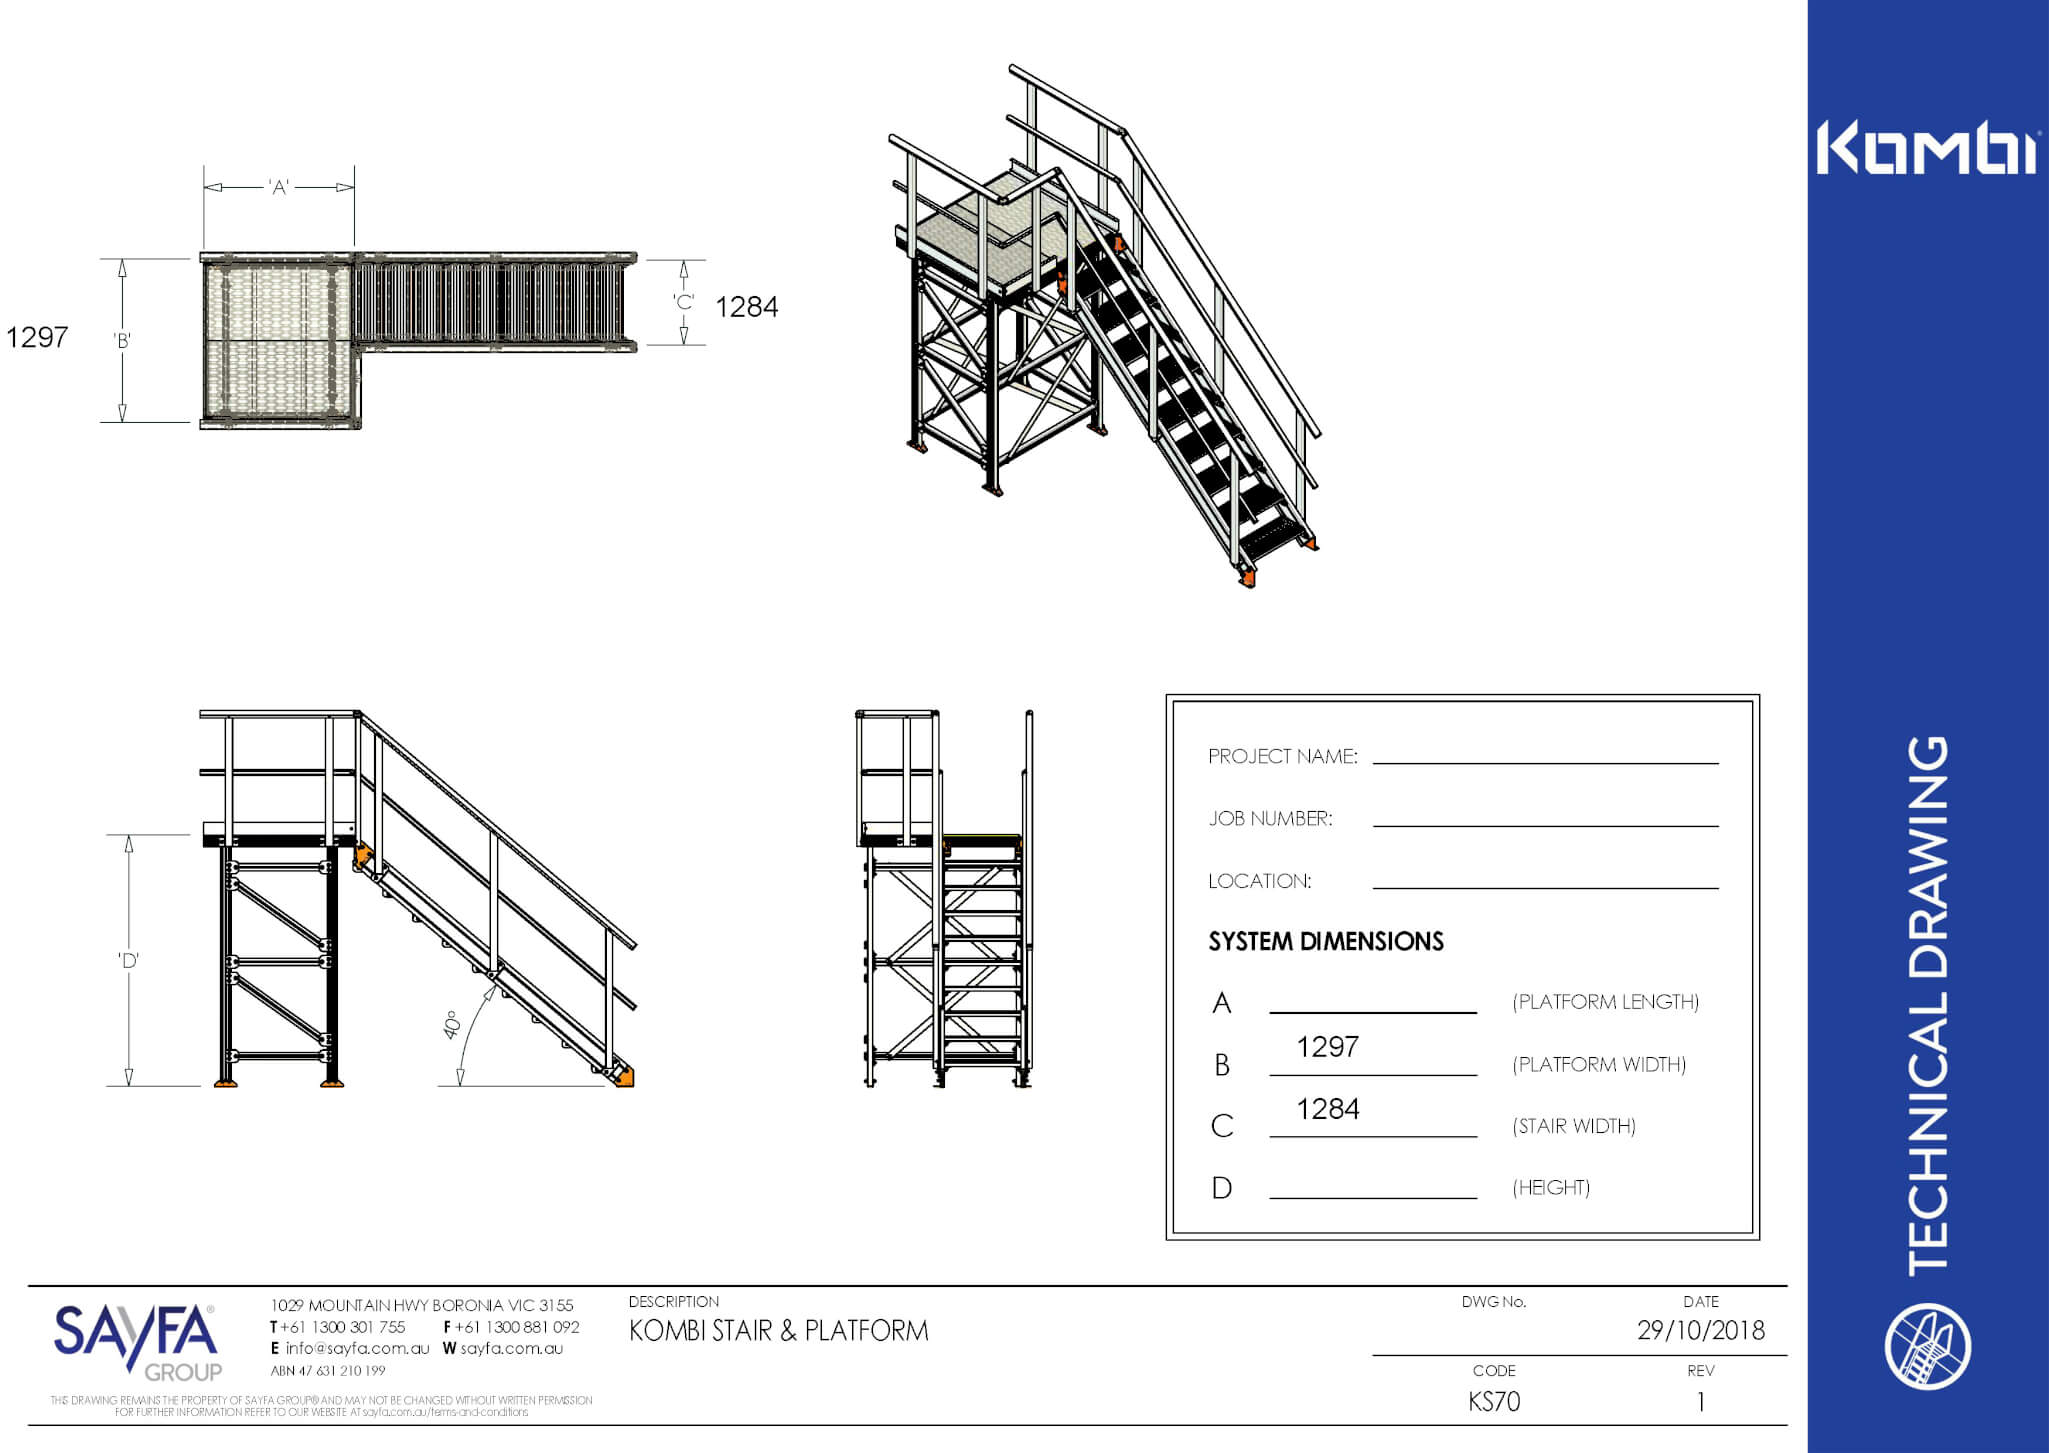 KS70 KOMBI Stair and Platform pdf image